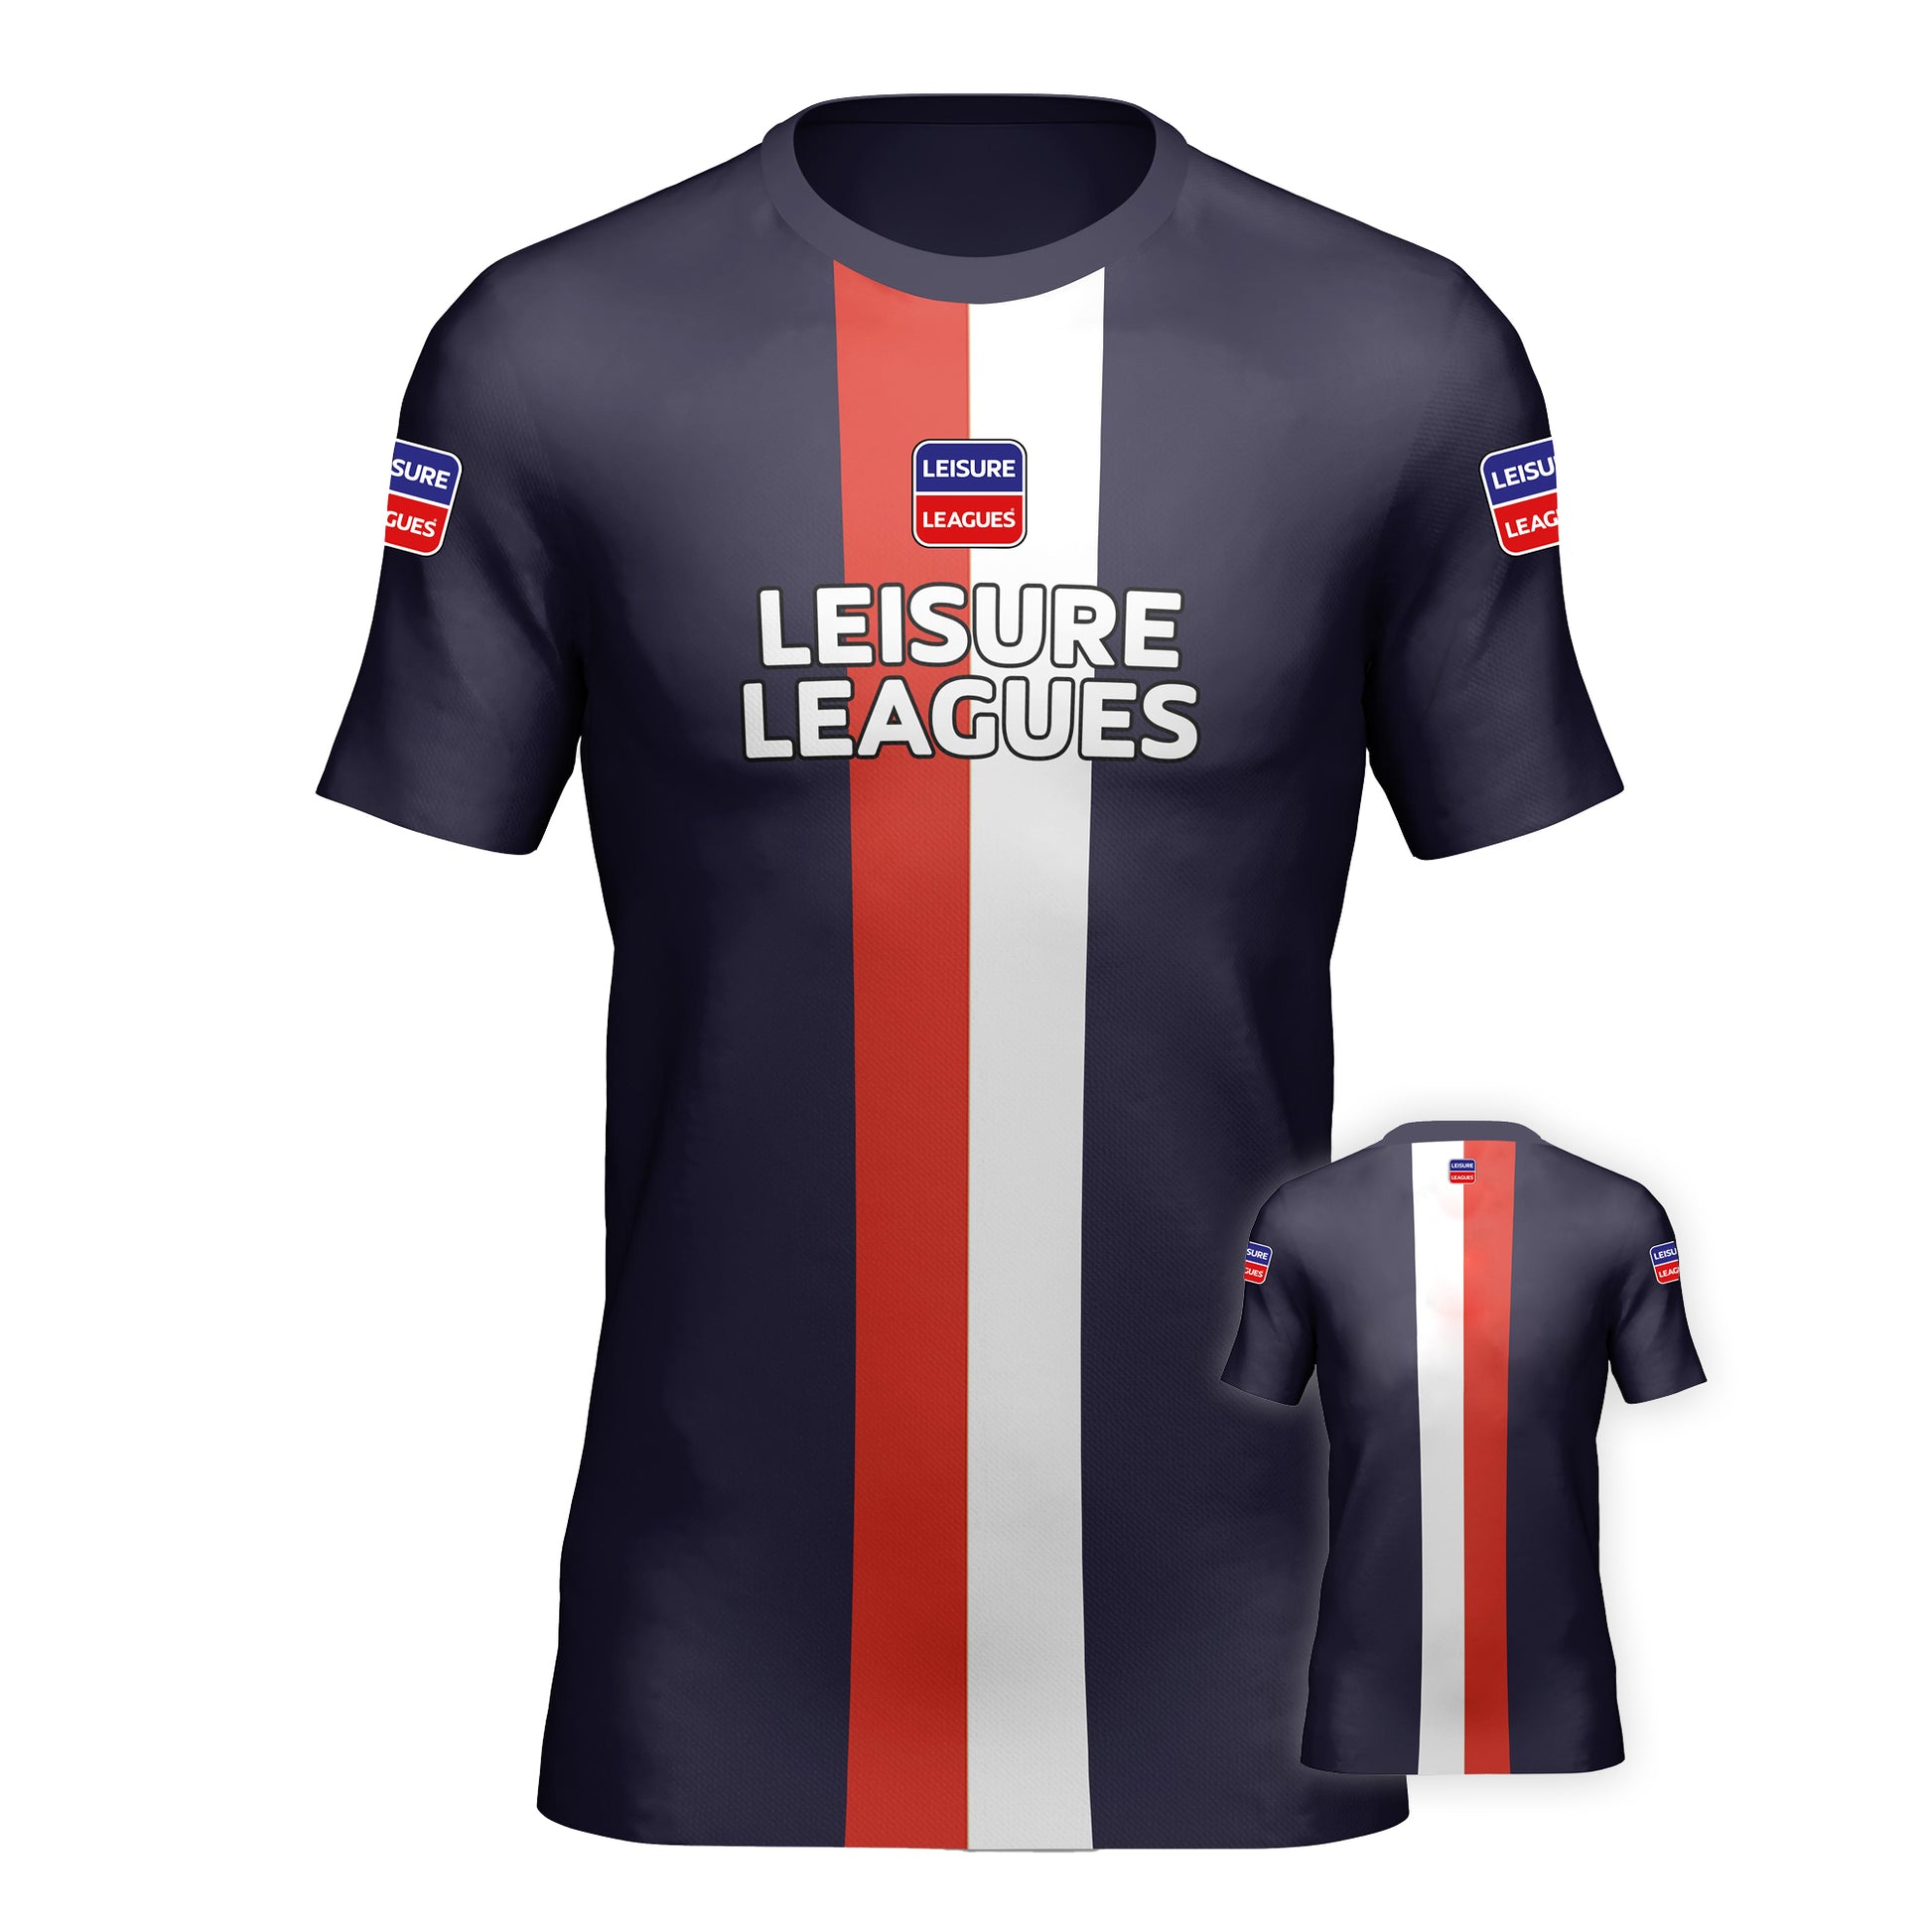 Football Shirt Leisure Leagues Kit Team Tshirt Prussia Black